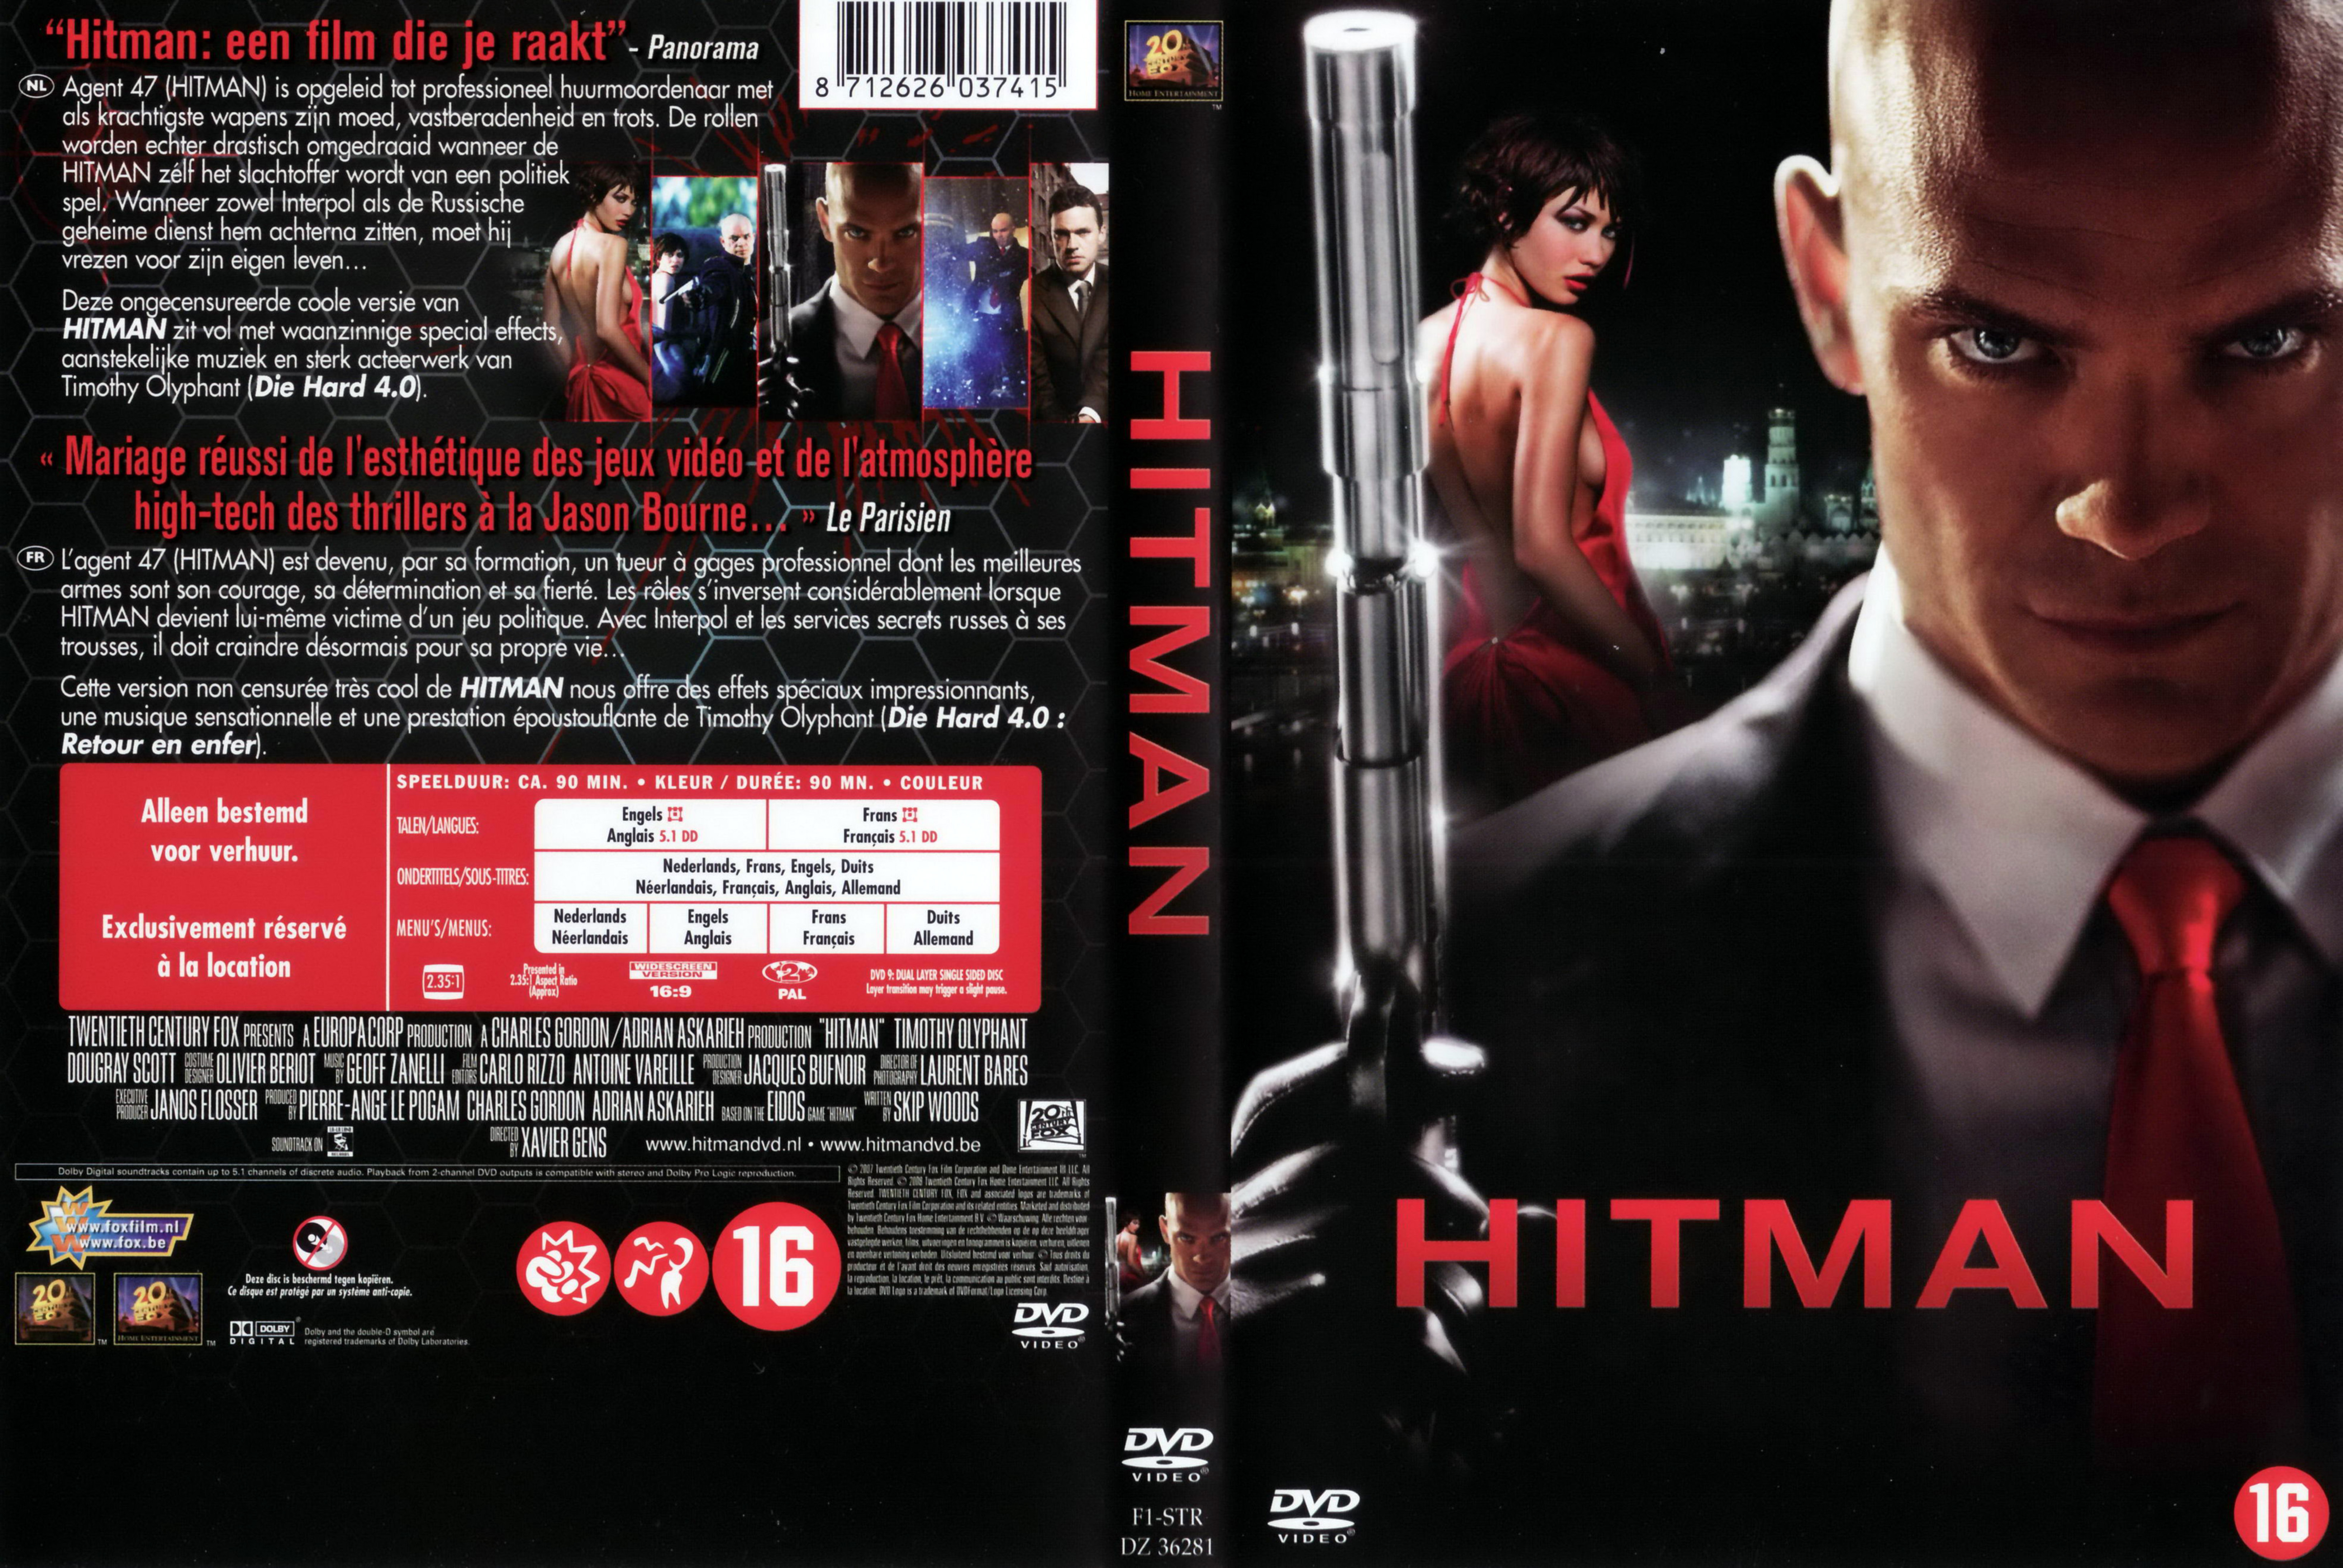 Jaquette DVD Hitman (2007) v2